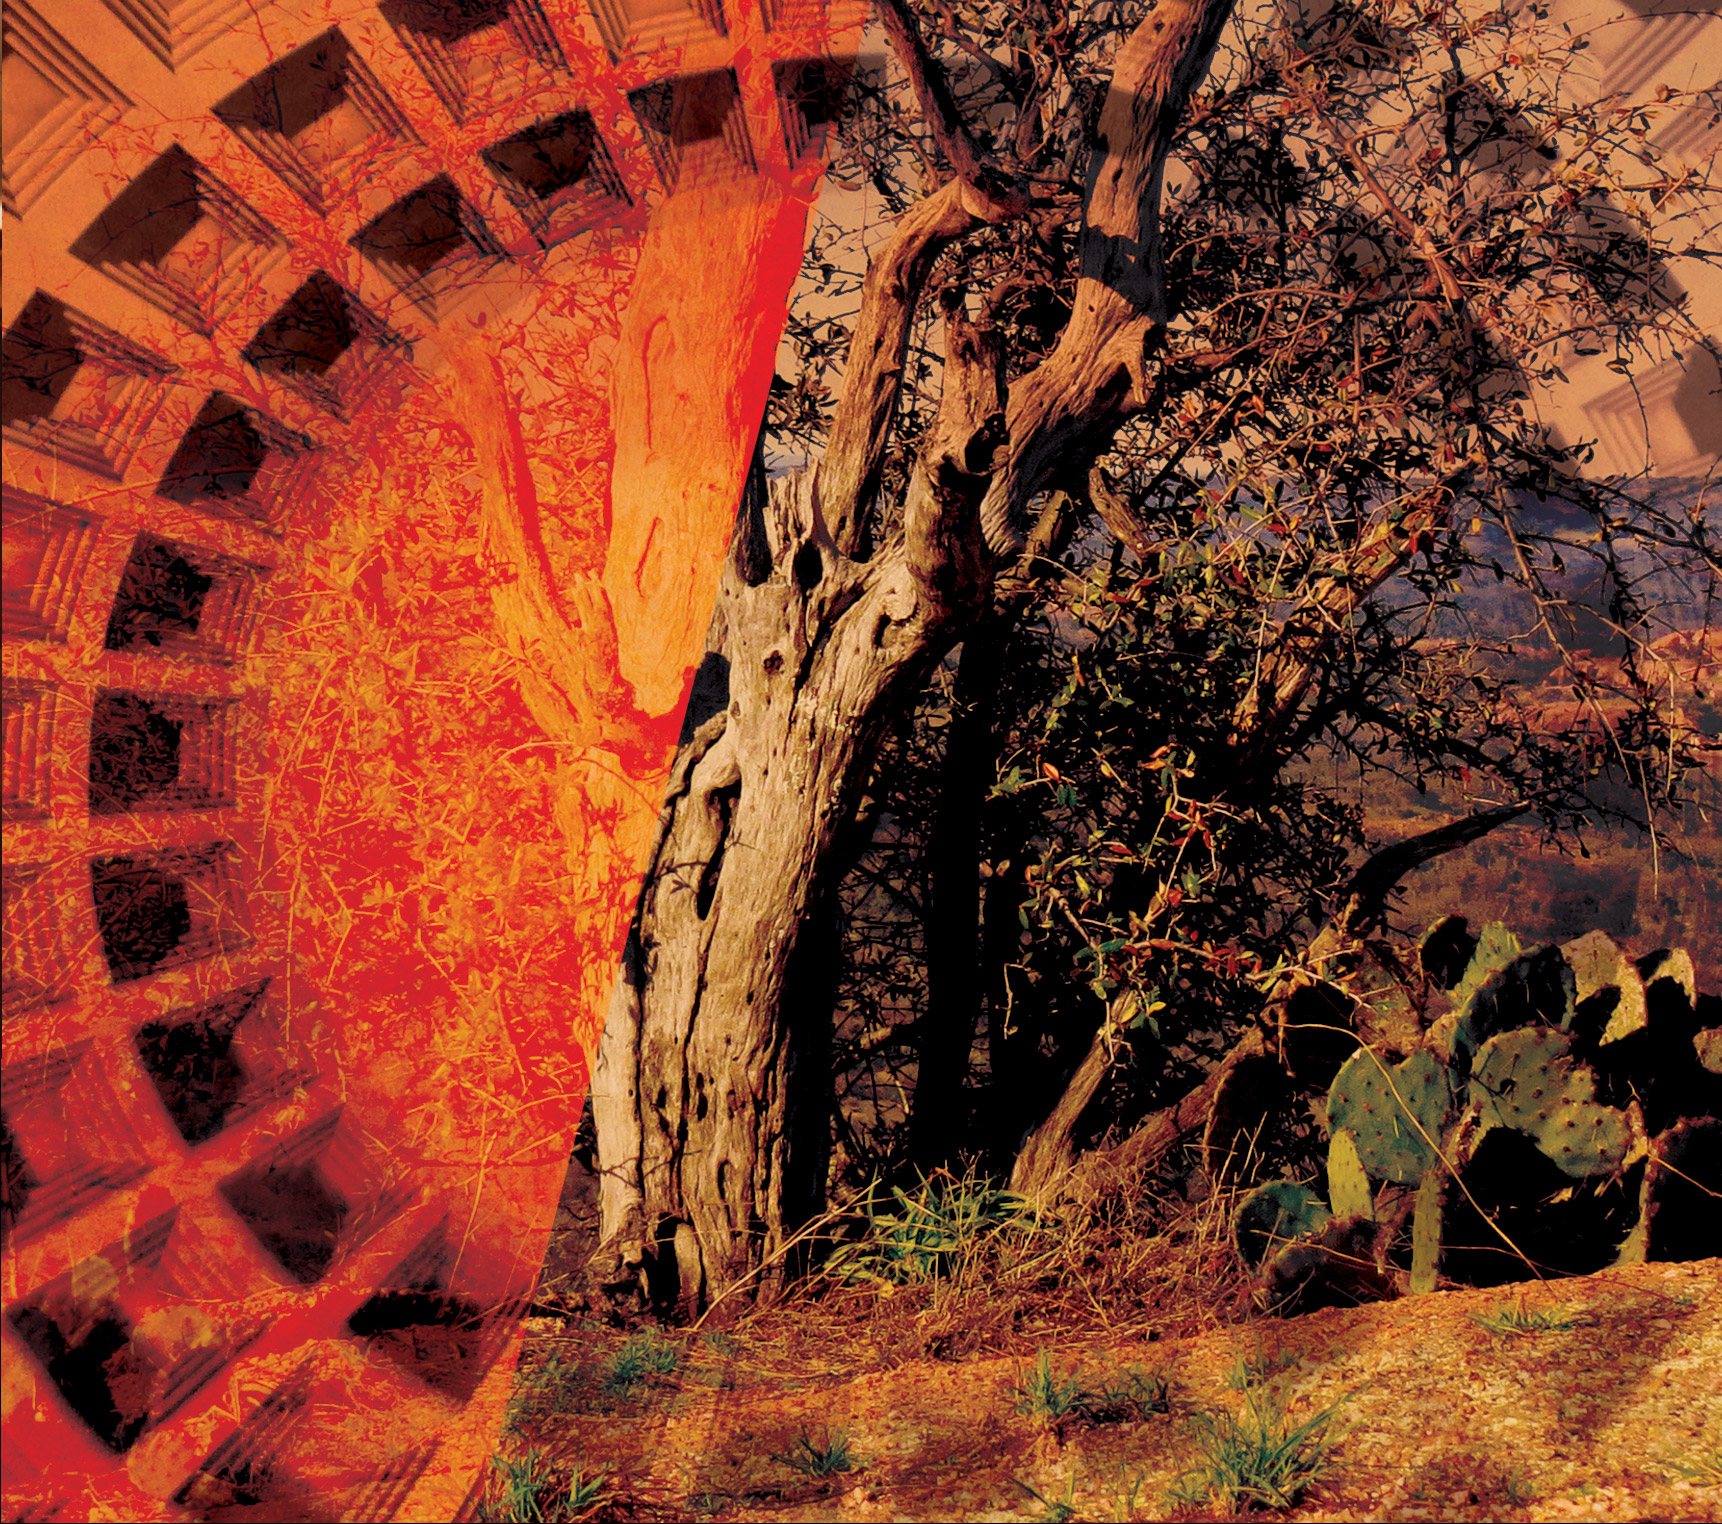 The Juantanamos - "Displacement" Album Art - CD Tray